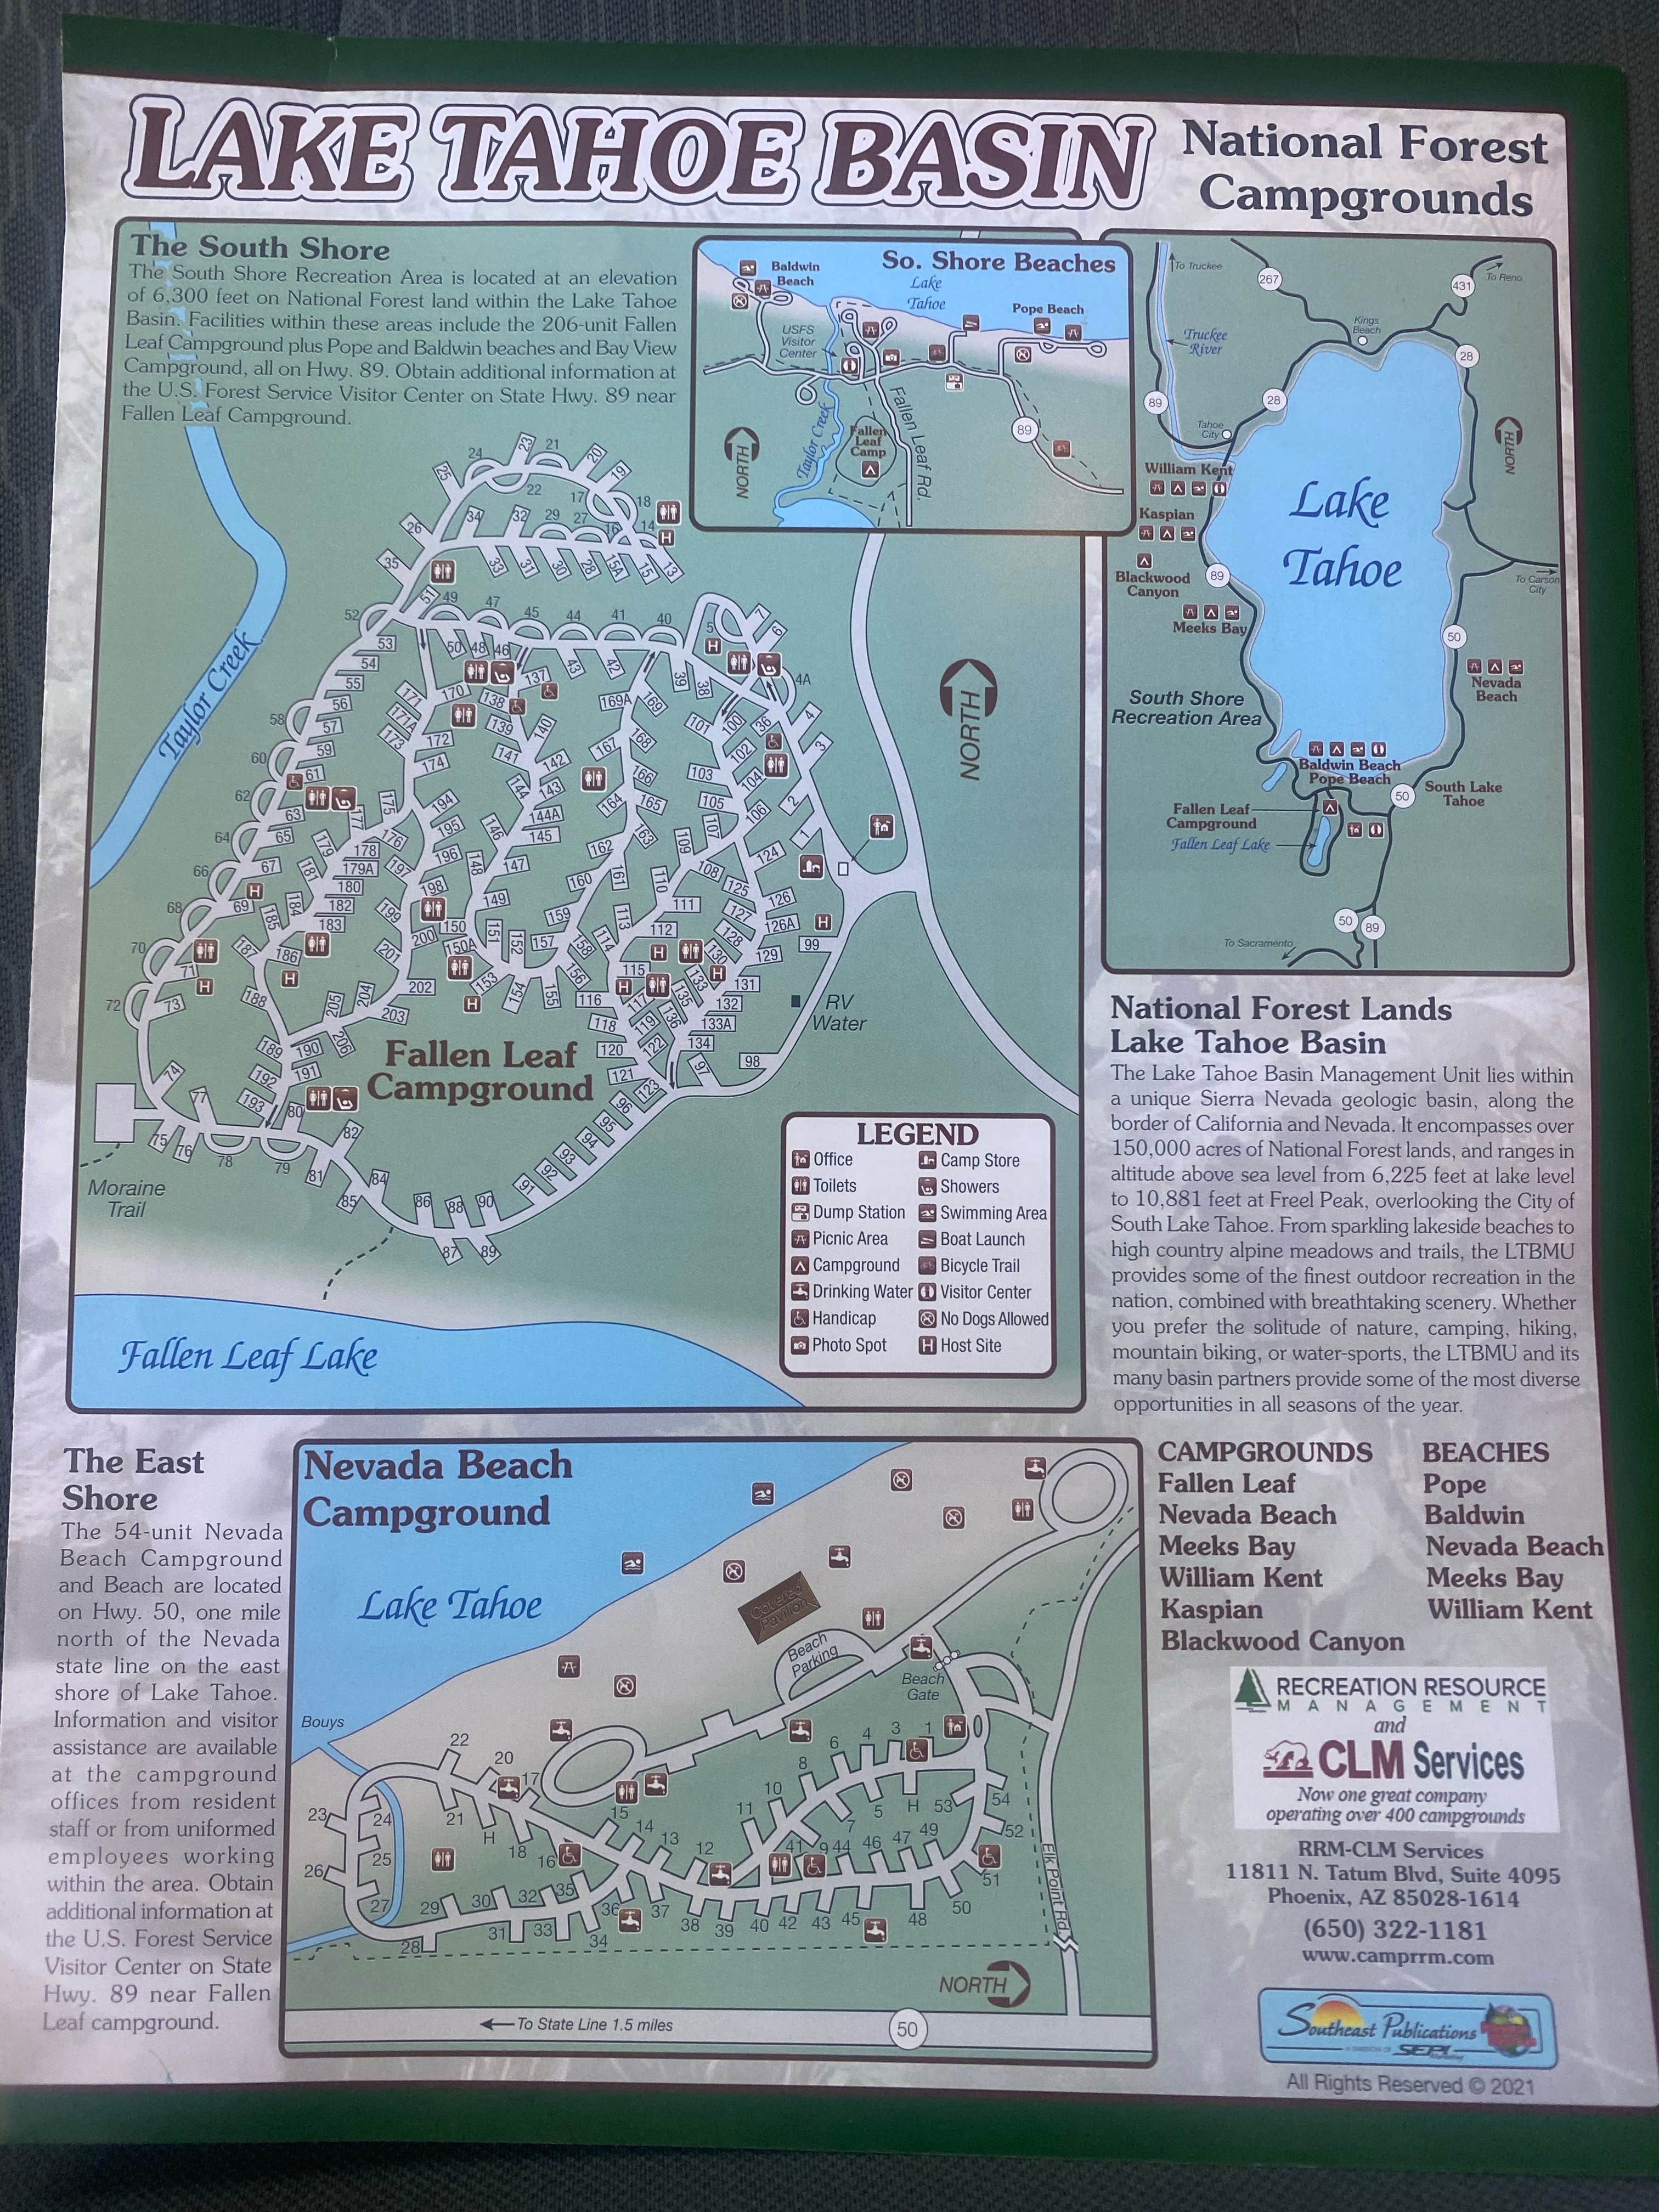 fallen leaf campground site map